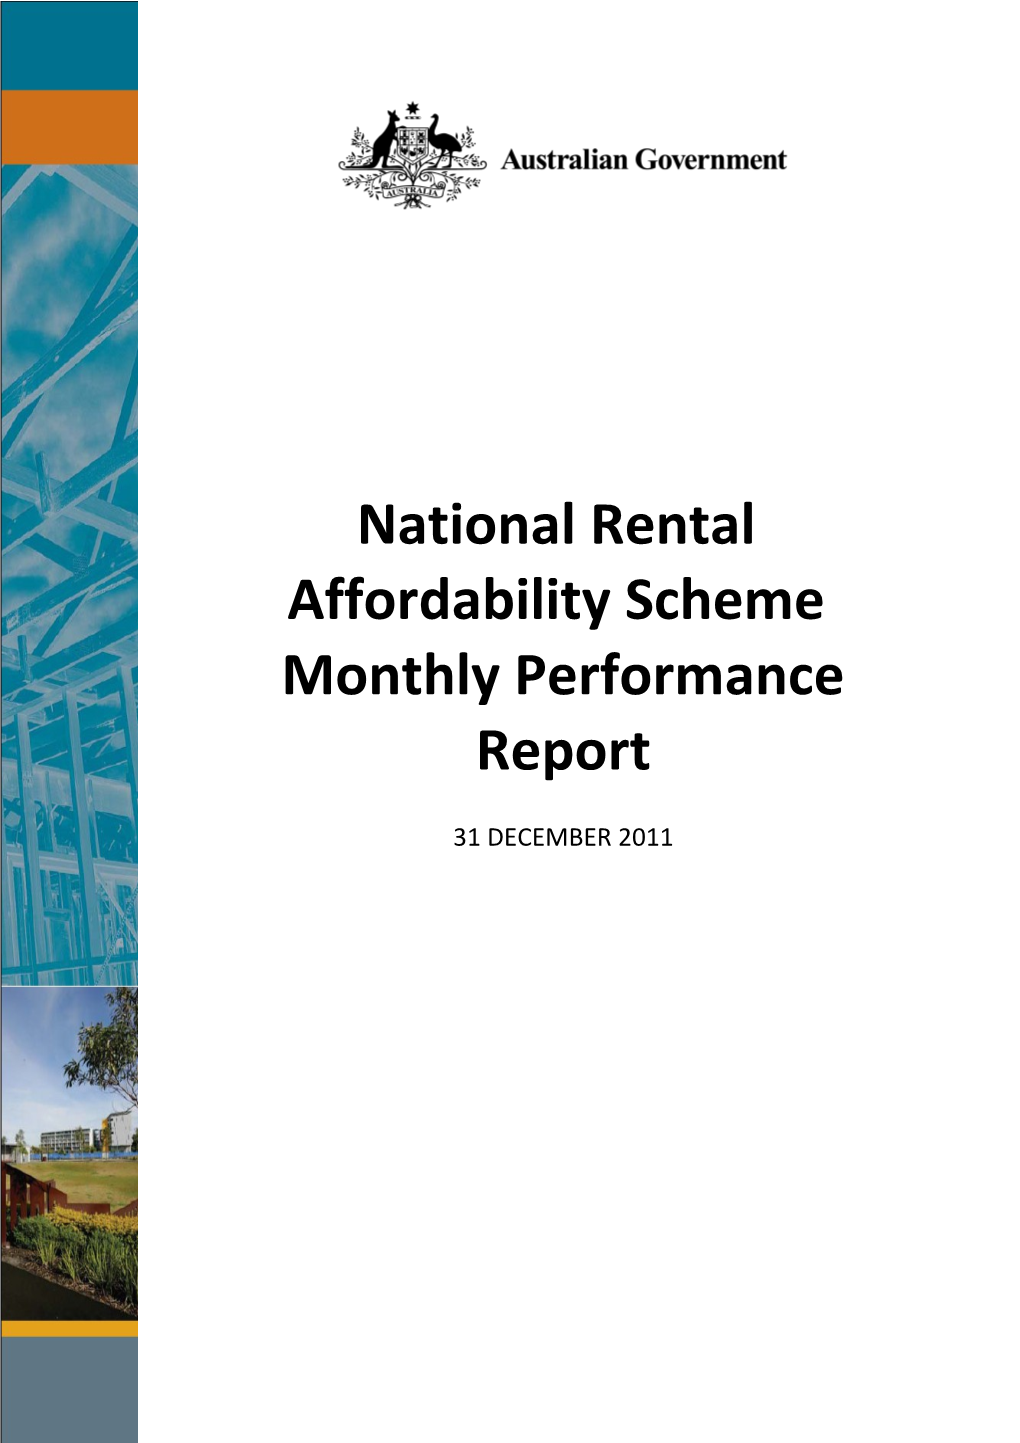 National Rental Affordability Scheme Performance Report - December 2011